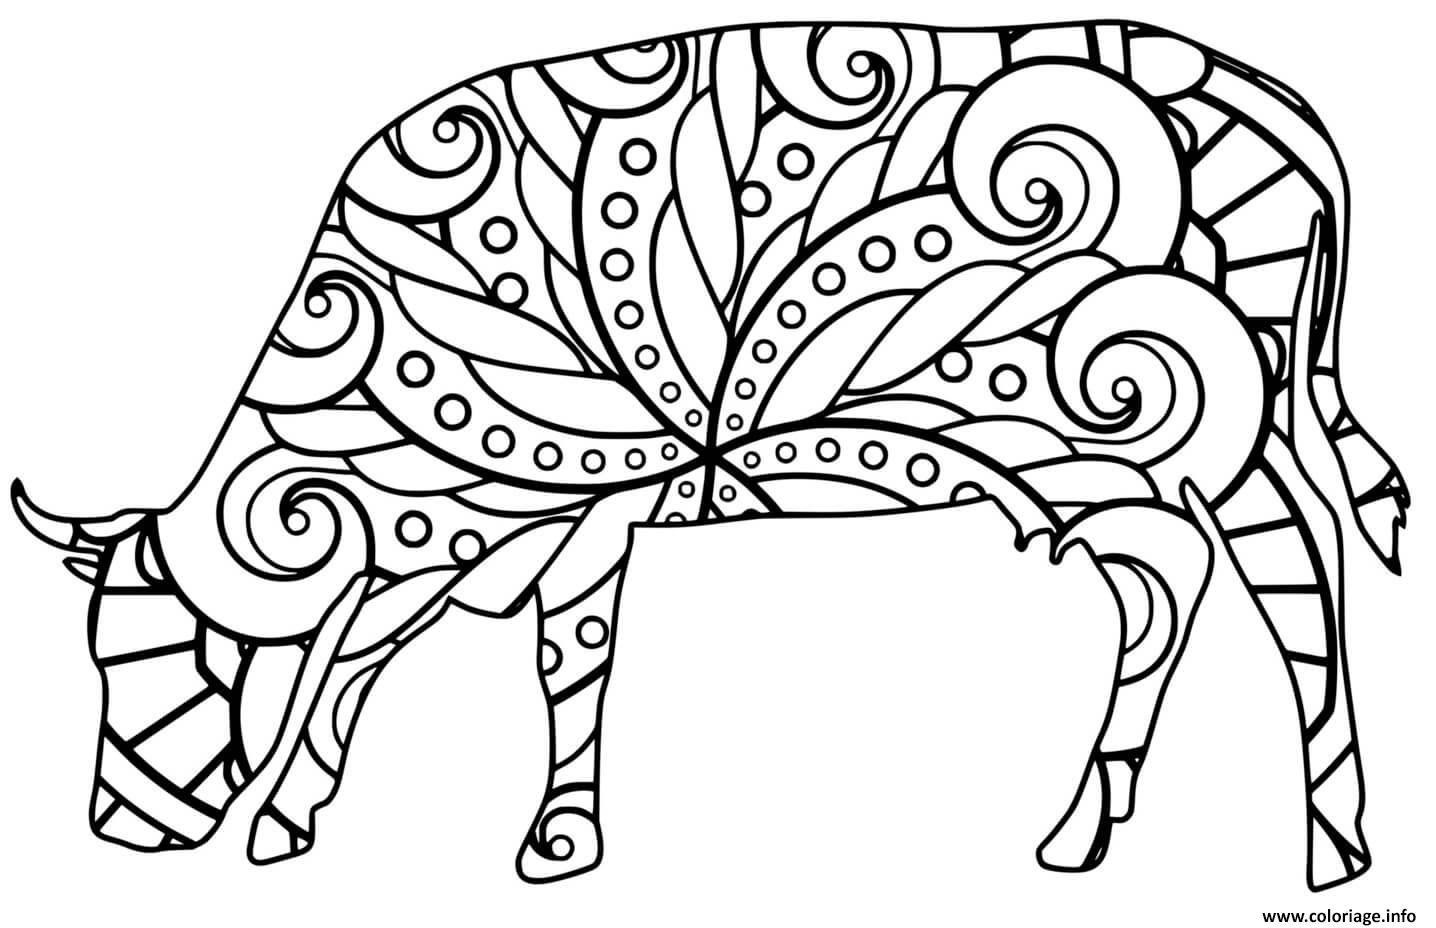 Coloriage Vache Mandala Adulte Zentangle Dessin à Imprimer